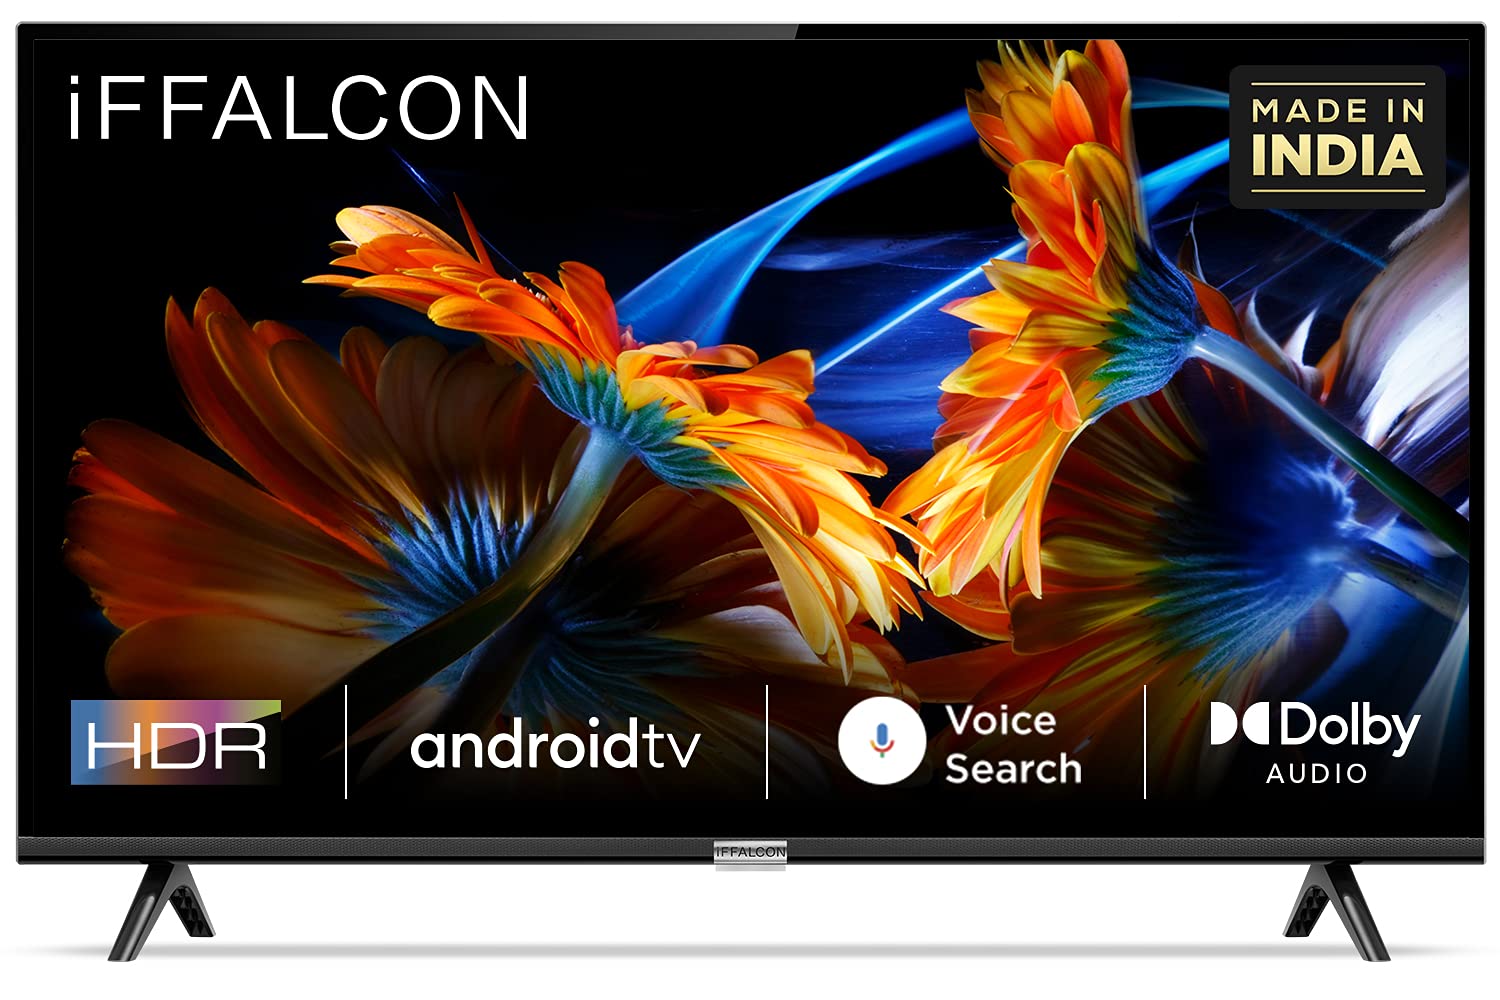 iFFALCON 80 cm (32 inches) HD Ready Smart LED TV 32F52 (Black)